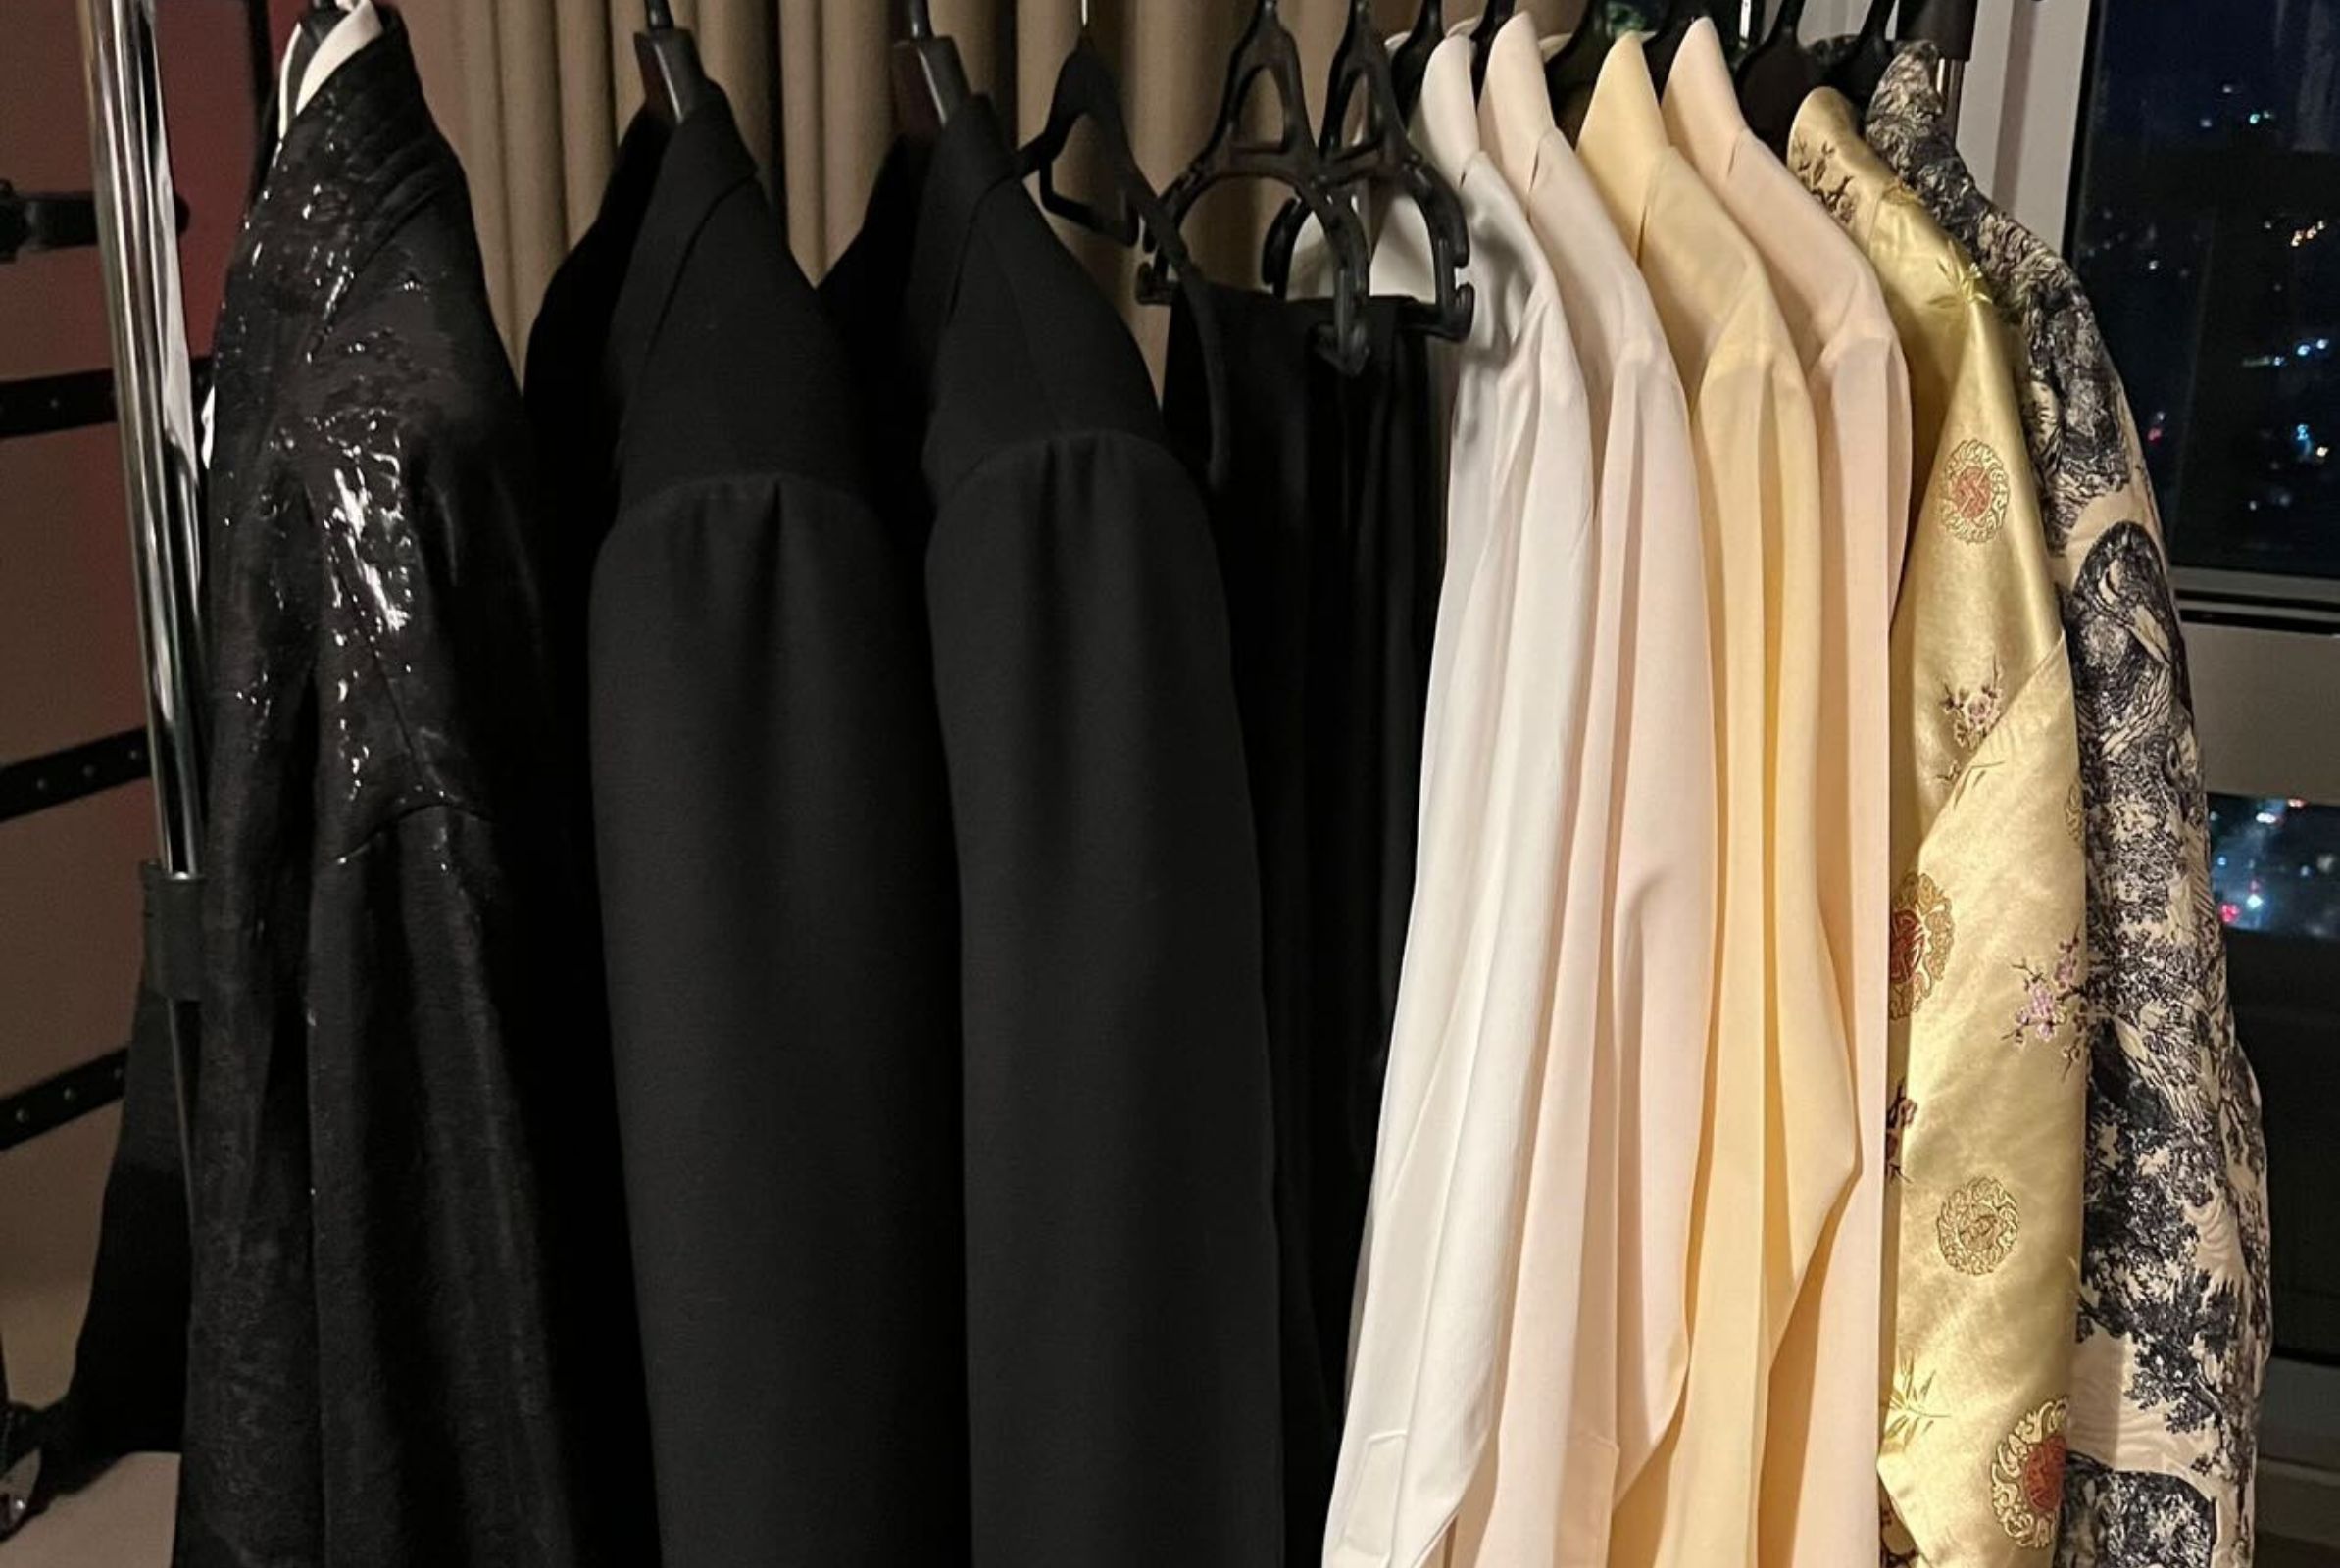 Daniel Padilla's wardrobe choices For the ABS-CBN Ball